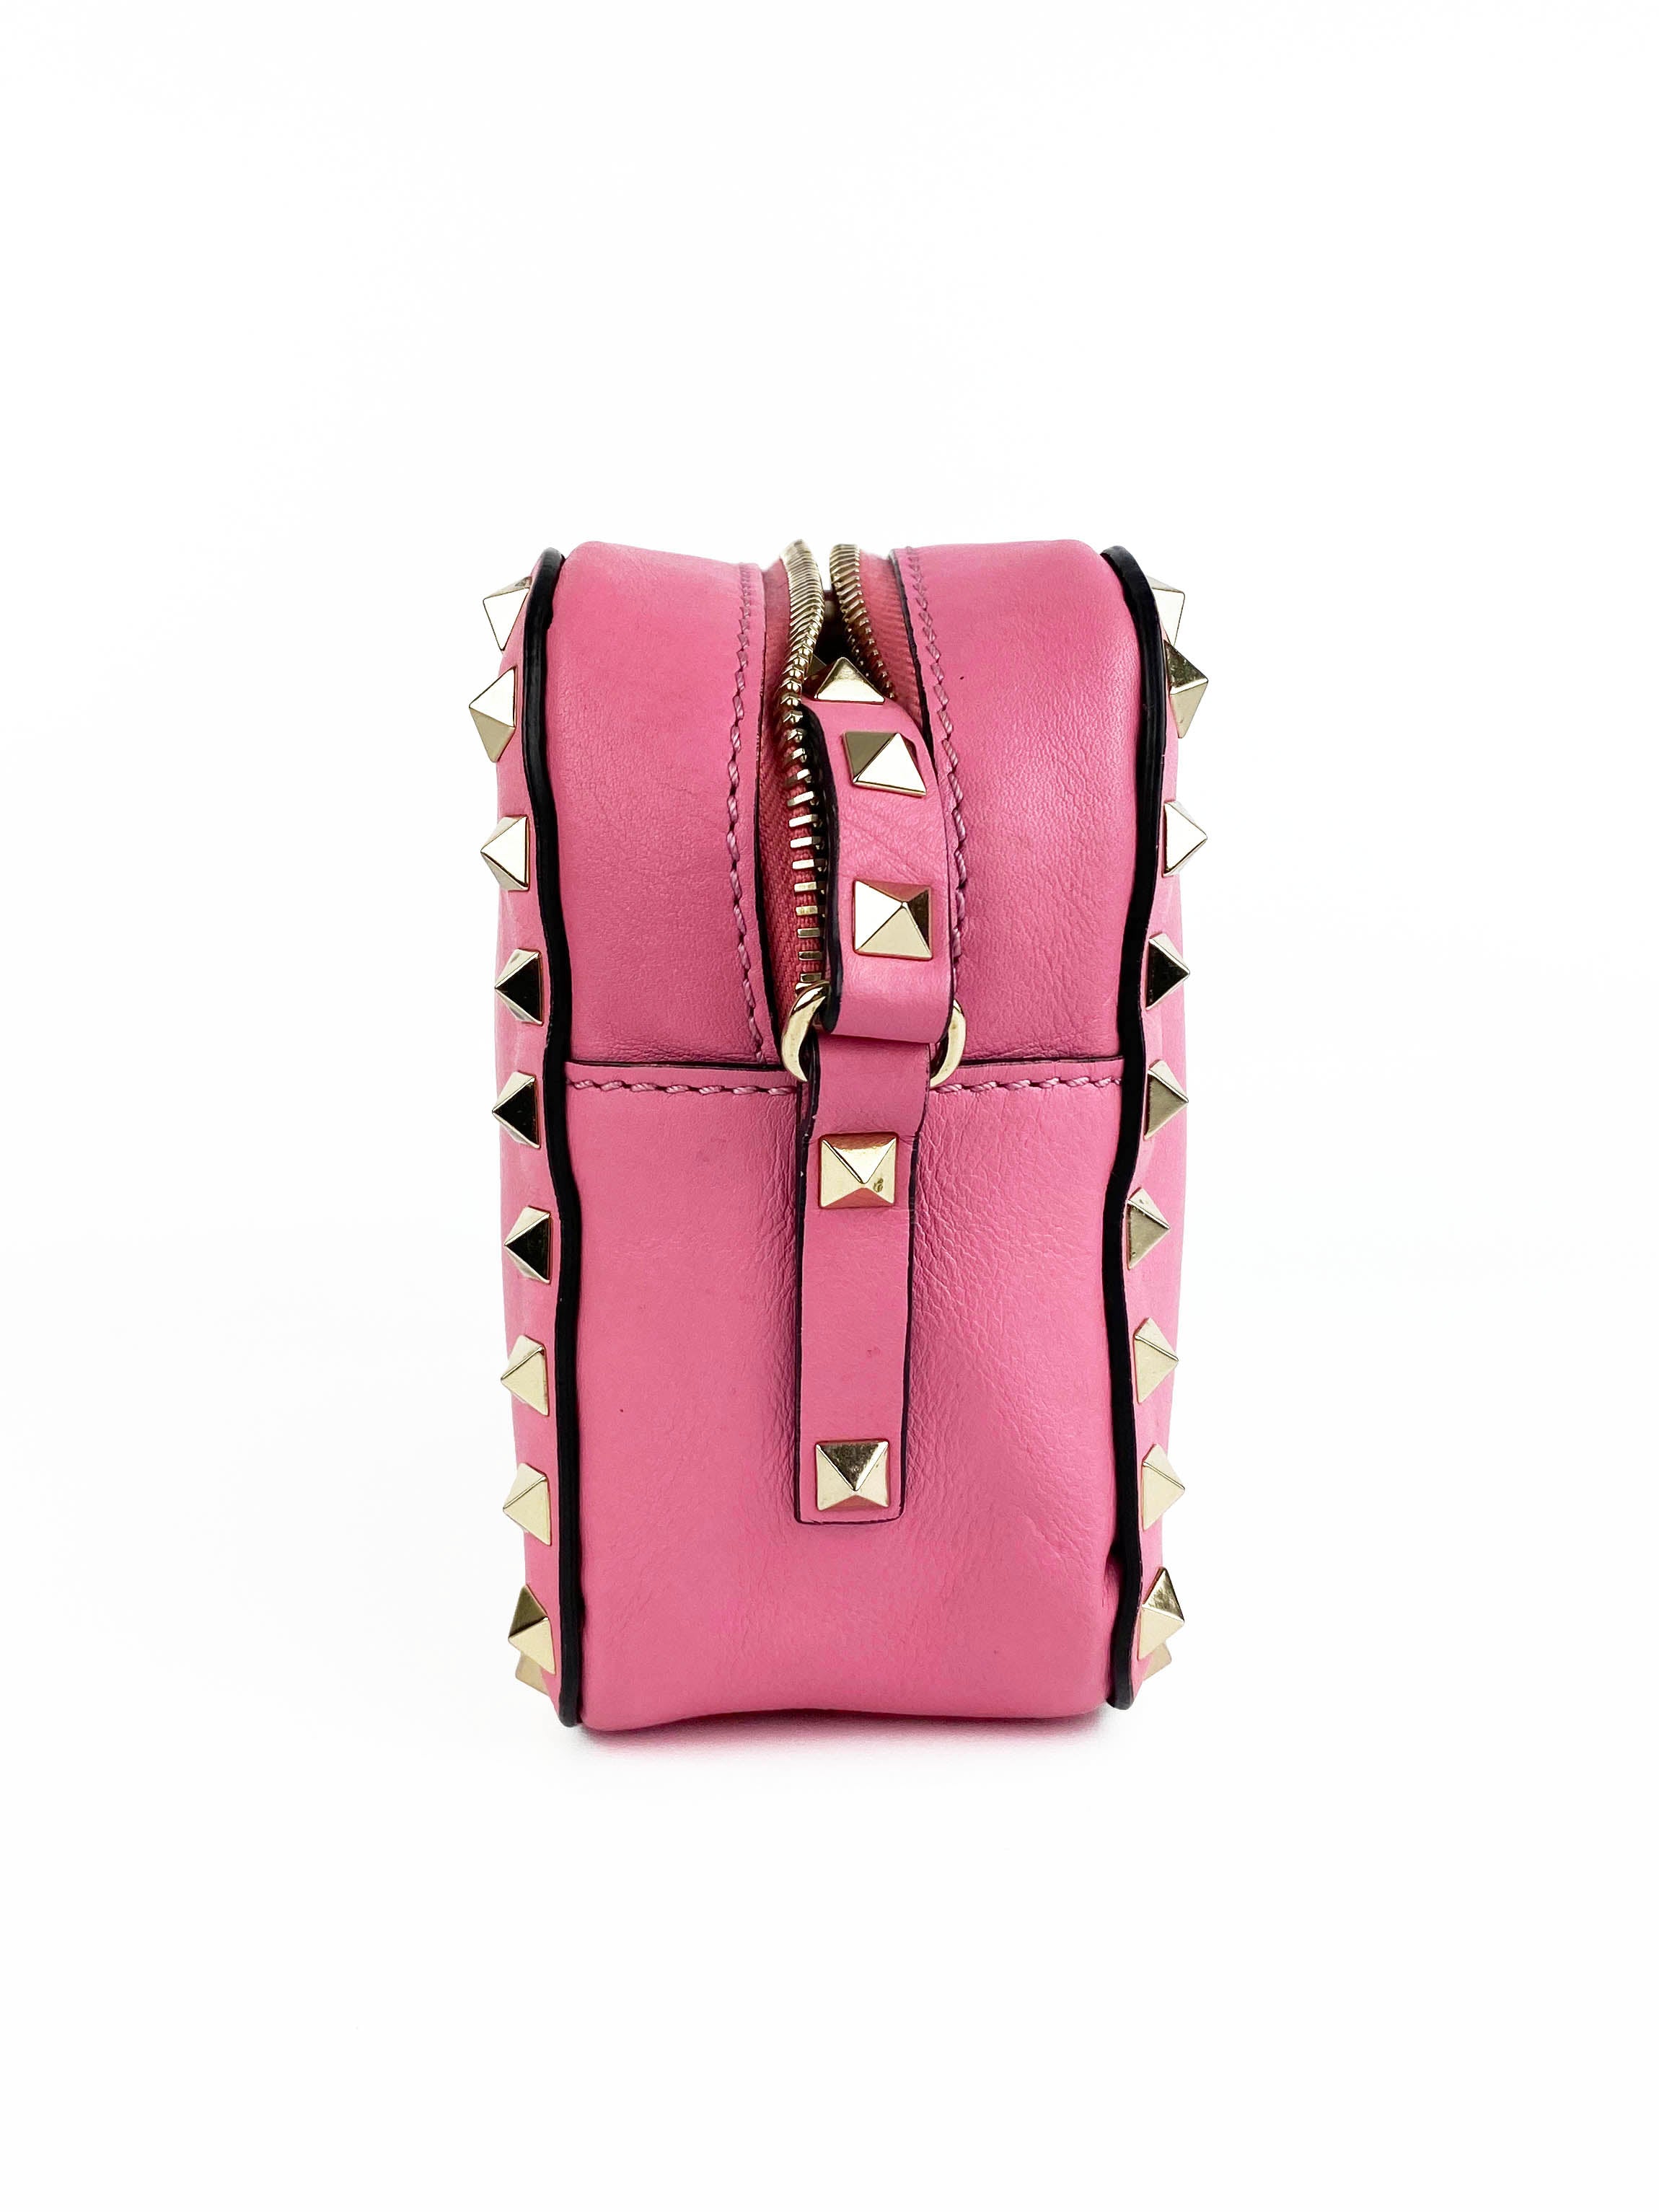 Valentino Garavani Pink Rockstud Camera Bag